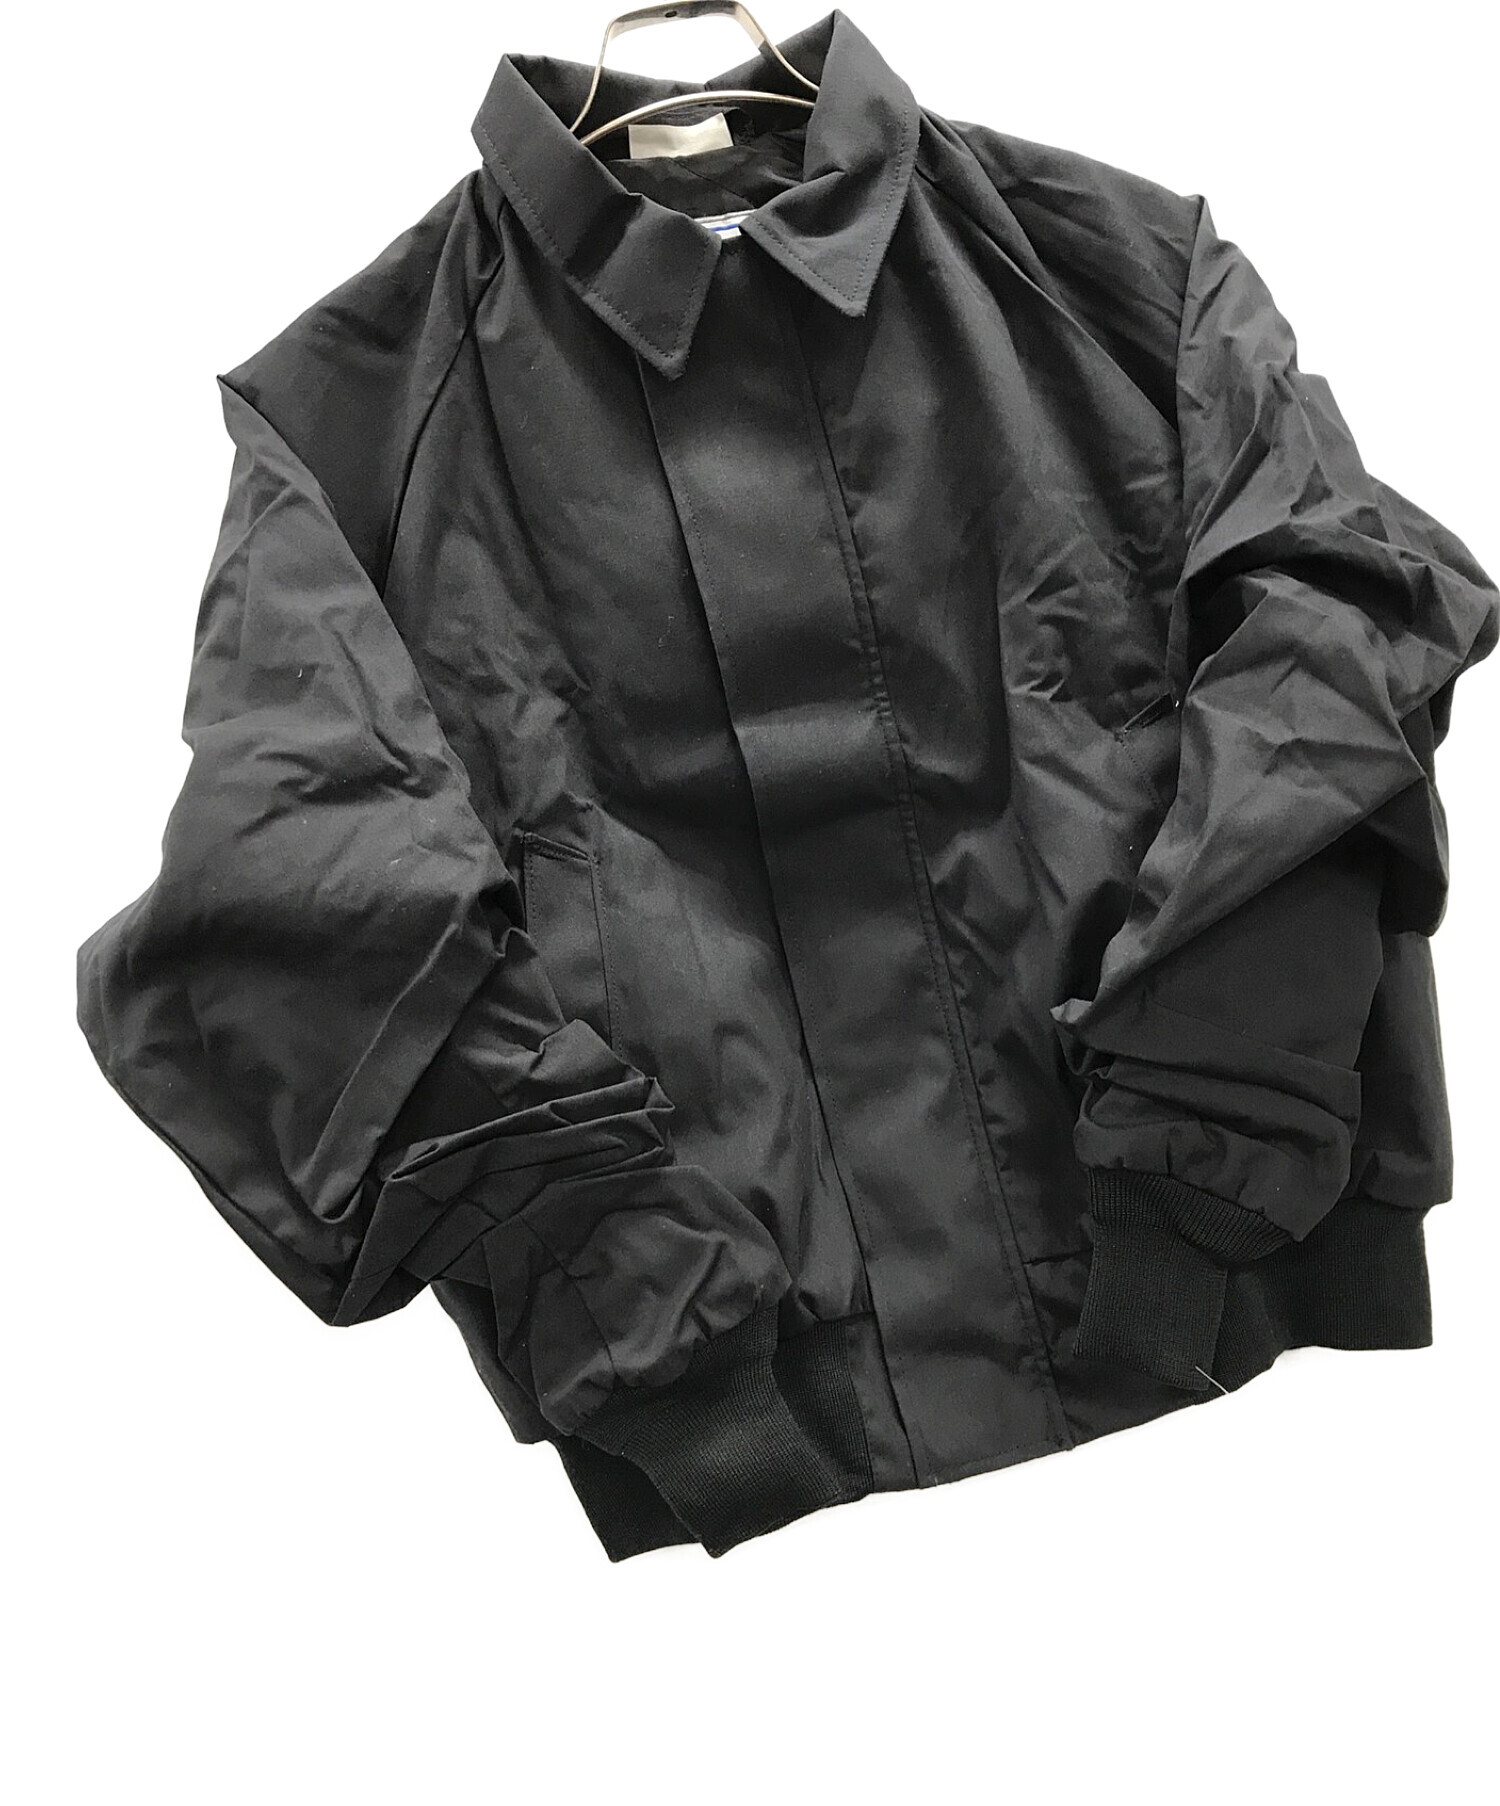 dscp quarterdeck collection UTILITY JACKET (ジャケット) 中綿ジャケット ブラック  サイズ:SMALL-XXSHORT 未使用品